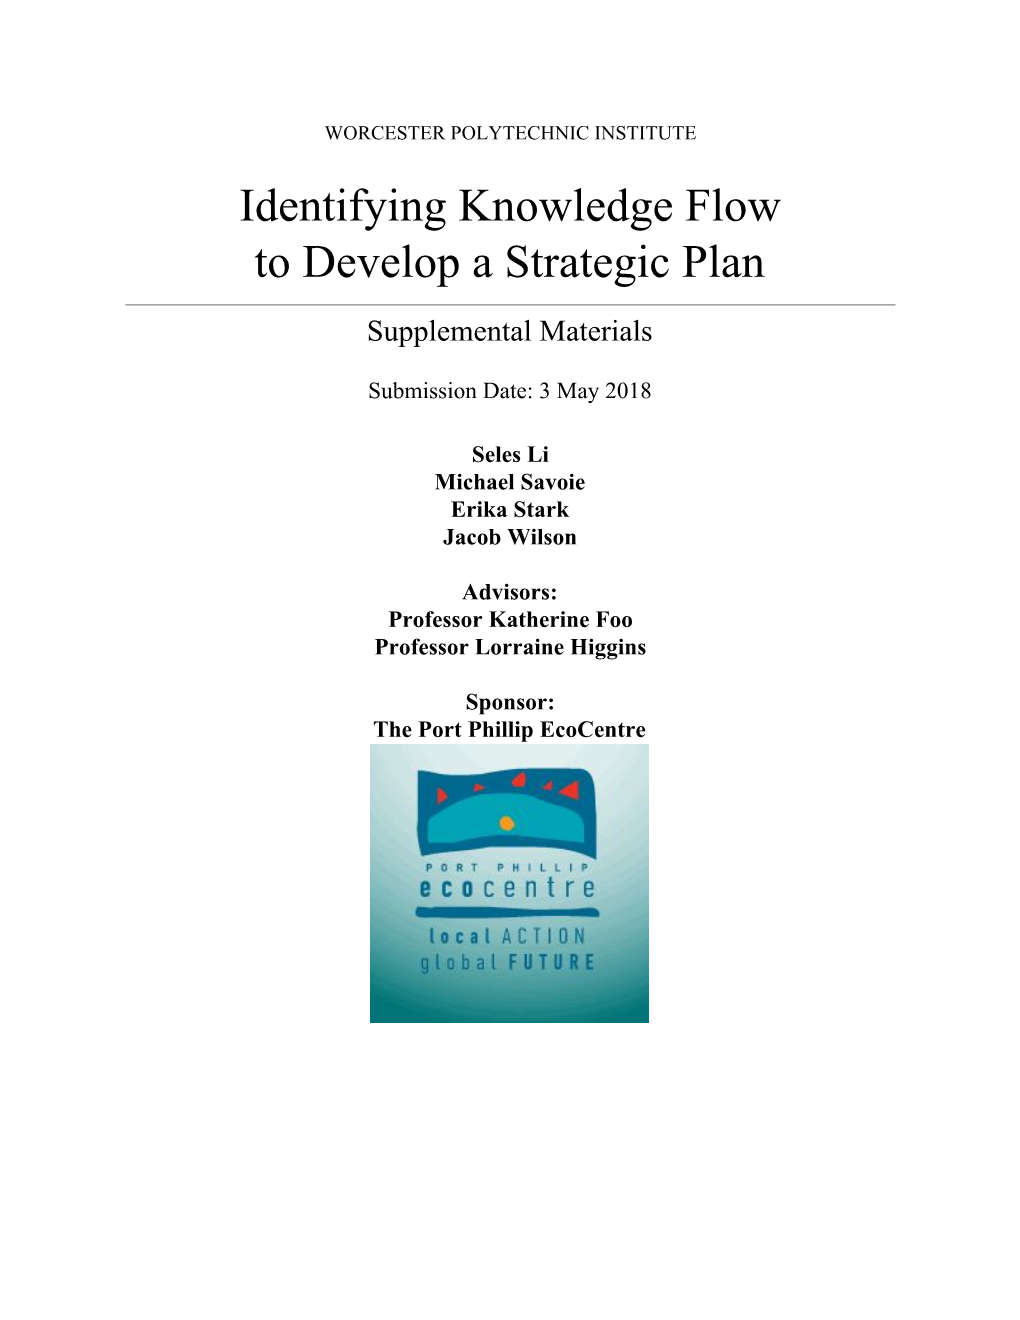 Identifying Knowledge Flow to Develop a Strategic Plan